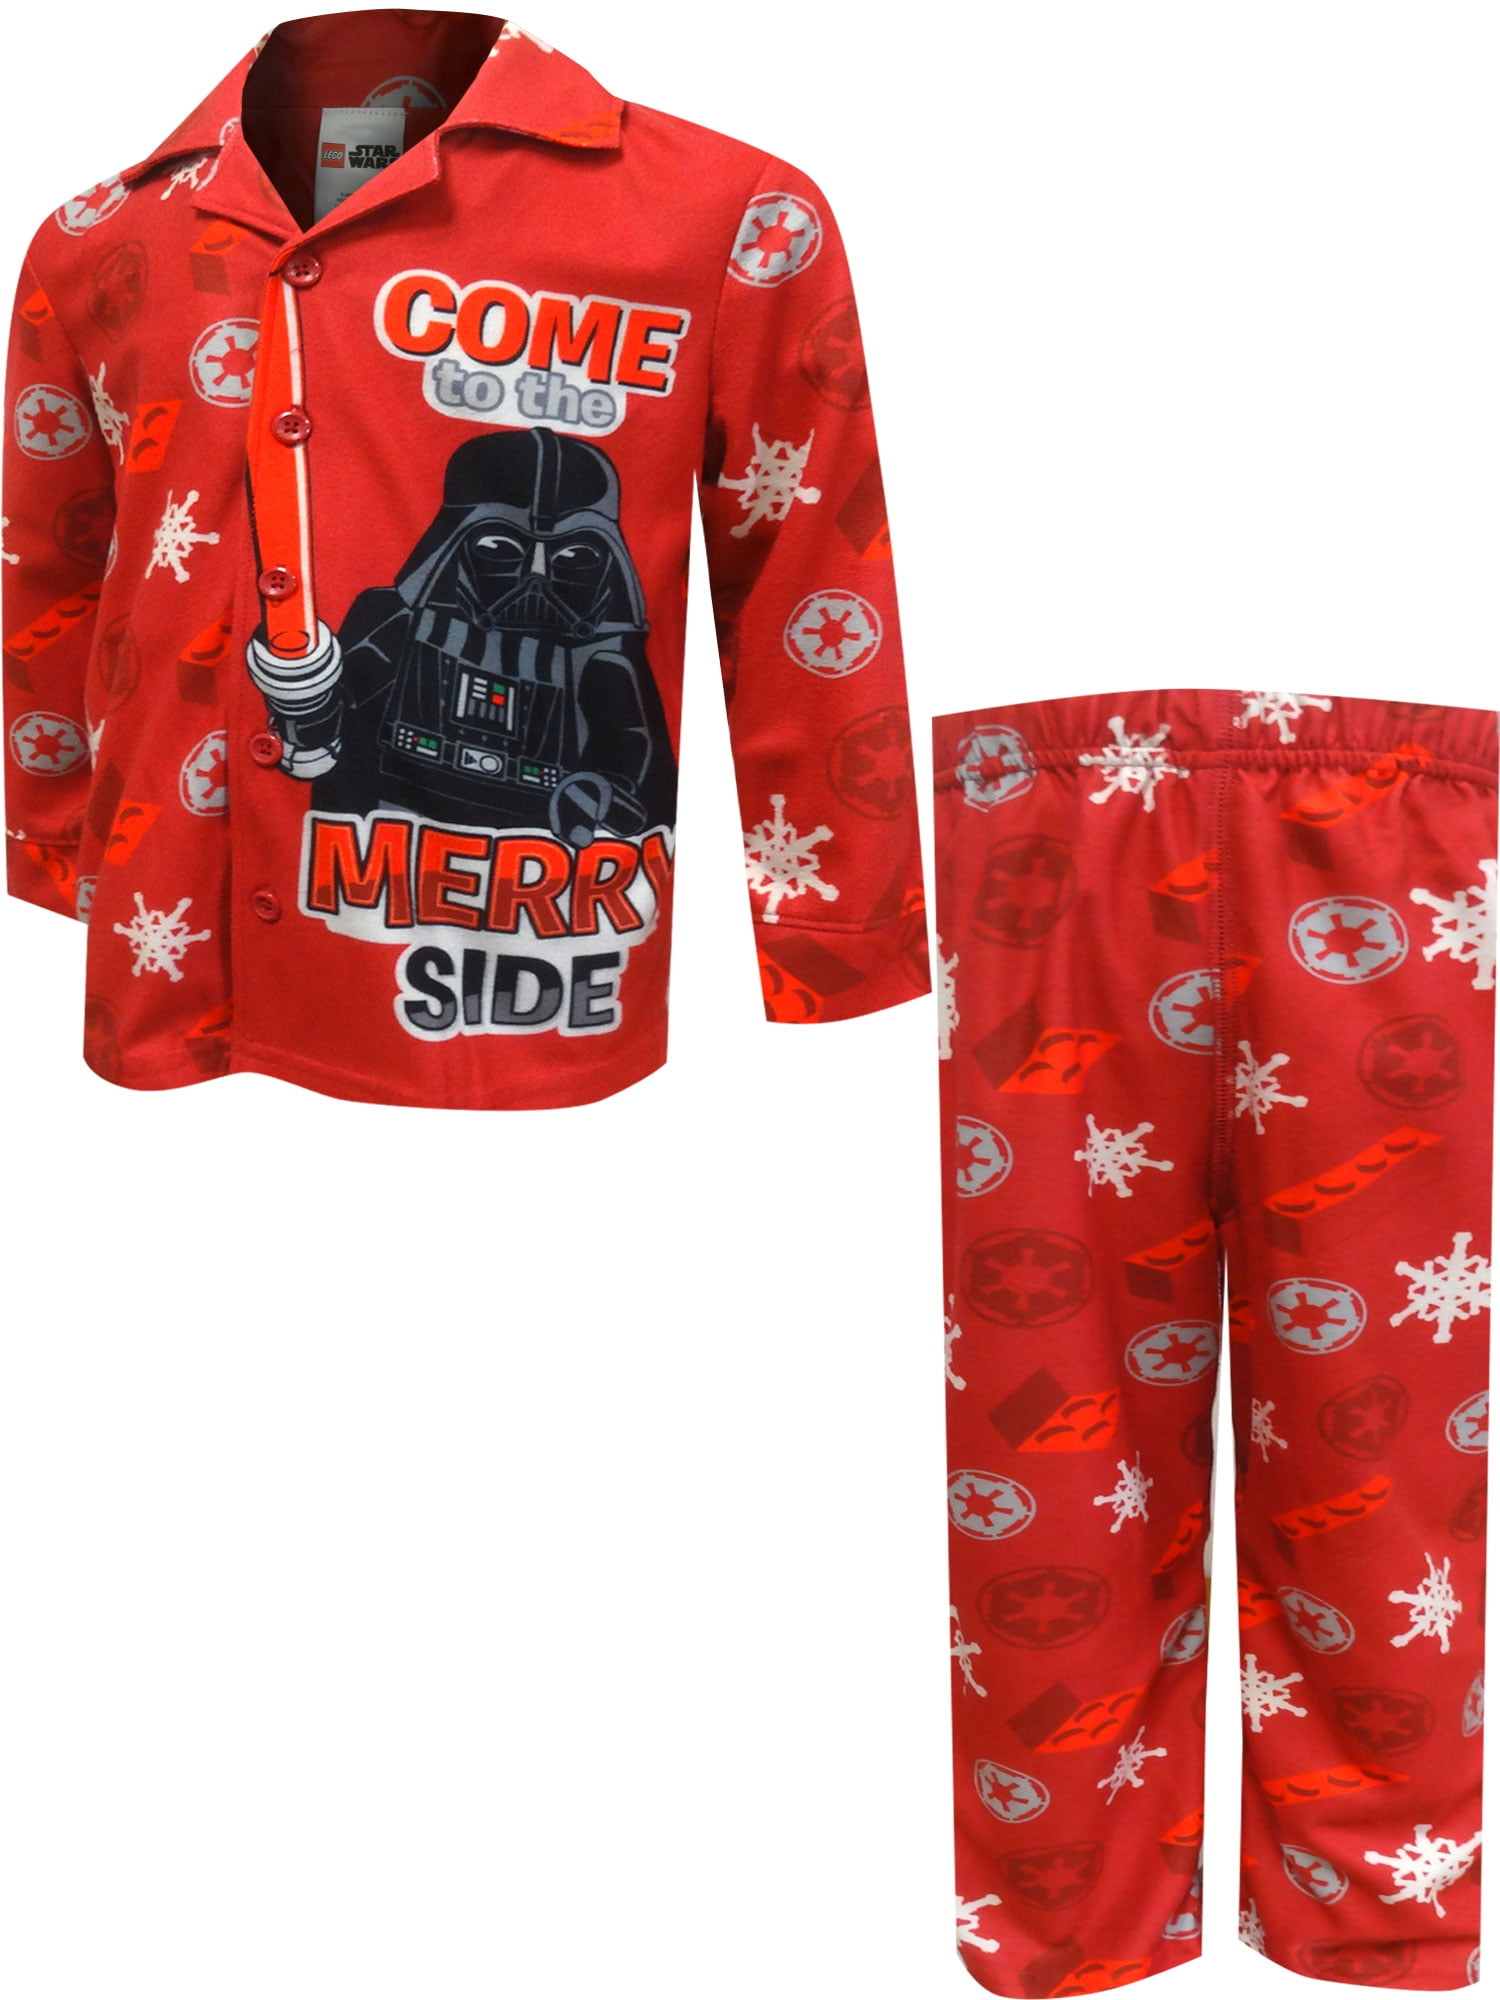 New Star Wars Pajama 3Pc Set Shirt Sleepwear Pant Underwear Imperial Darth Vader